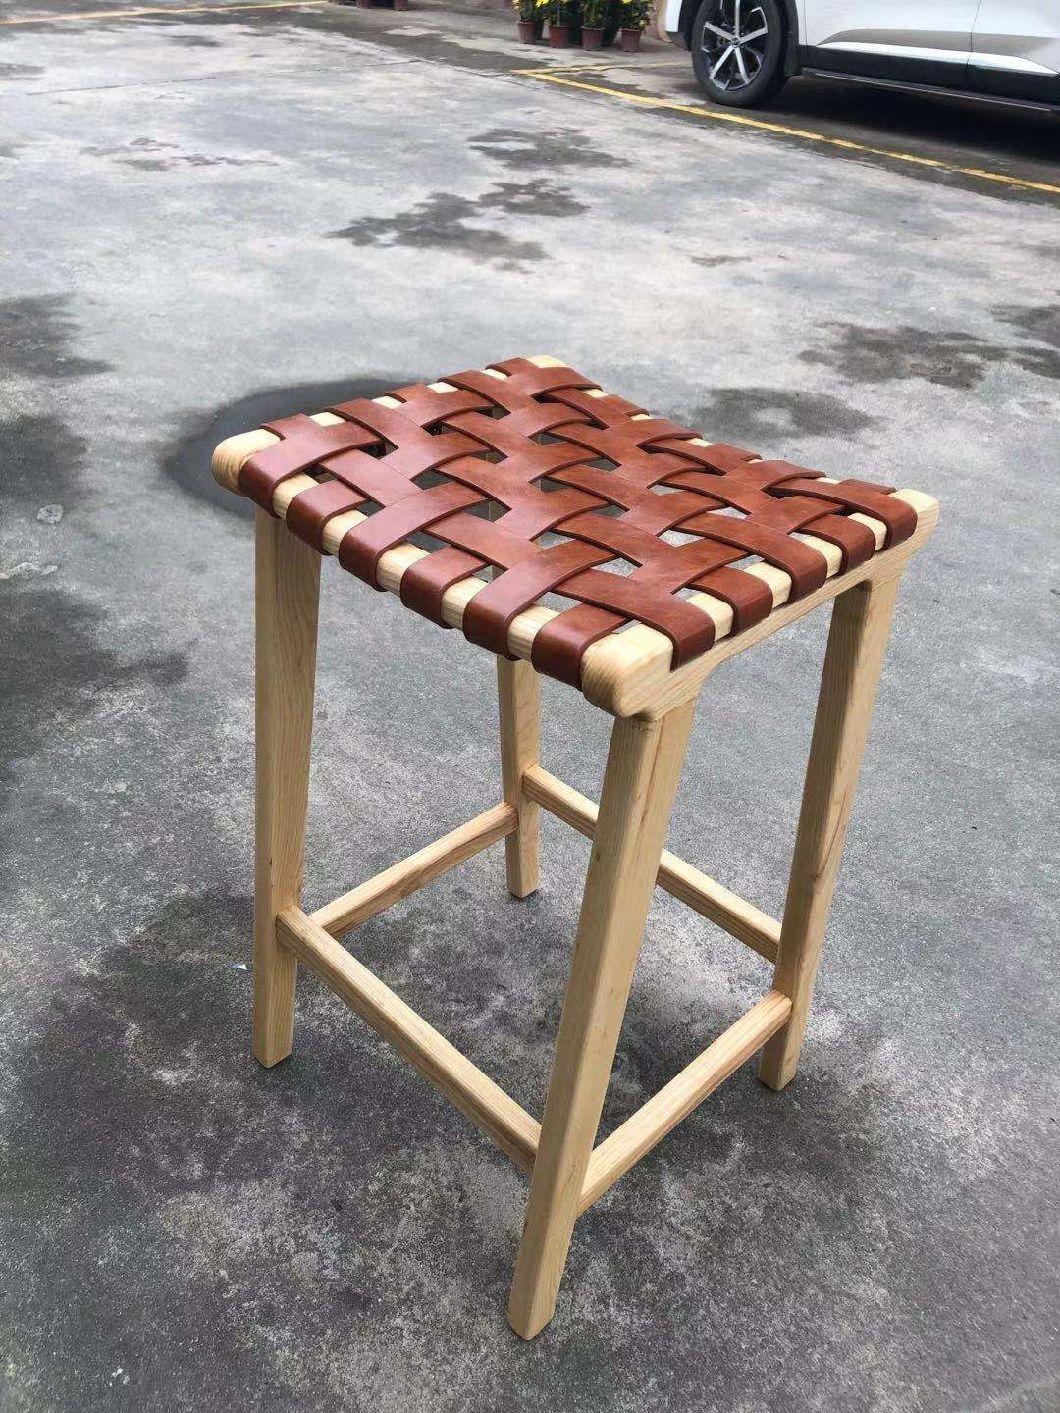 Modern Restaurant Furniture Black PU Leather Ash Wood Frame Lbar Stool Chair